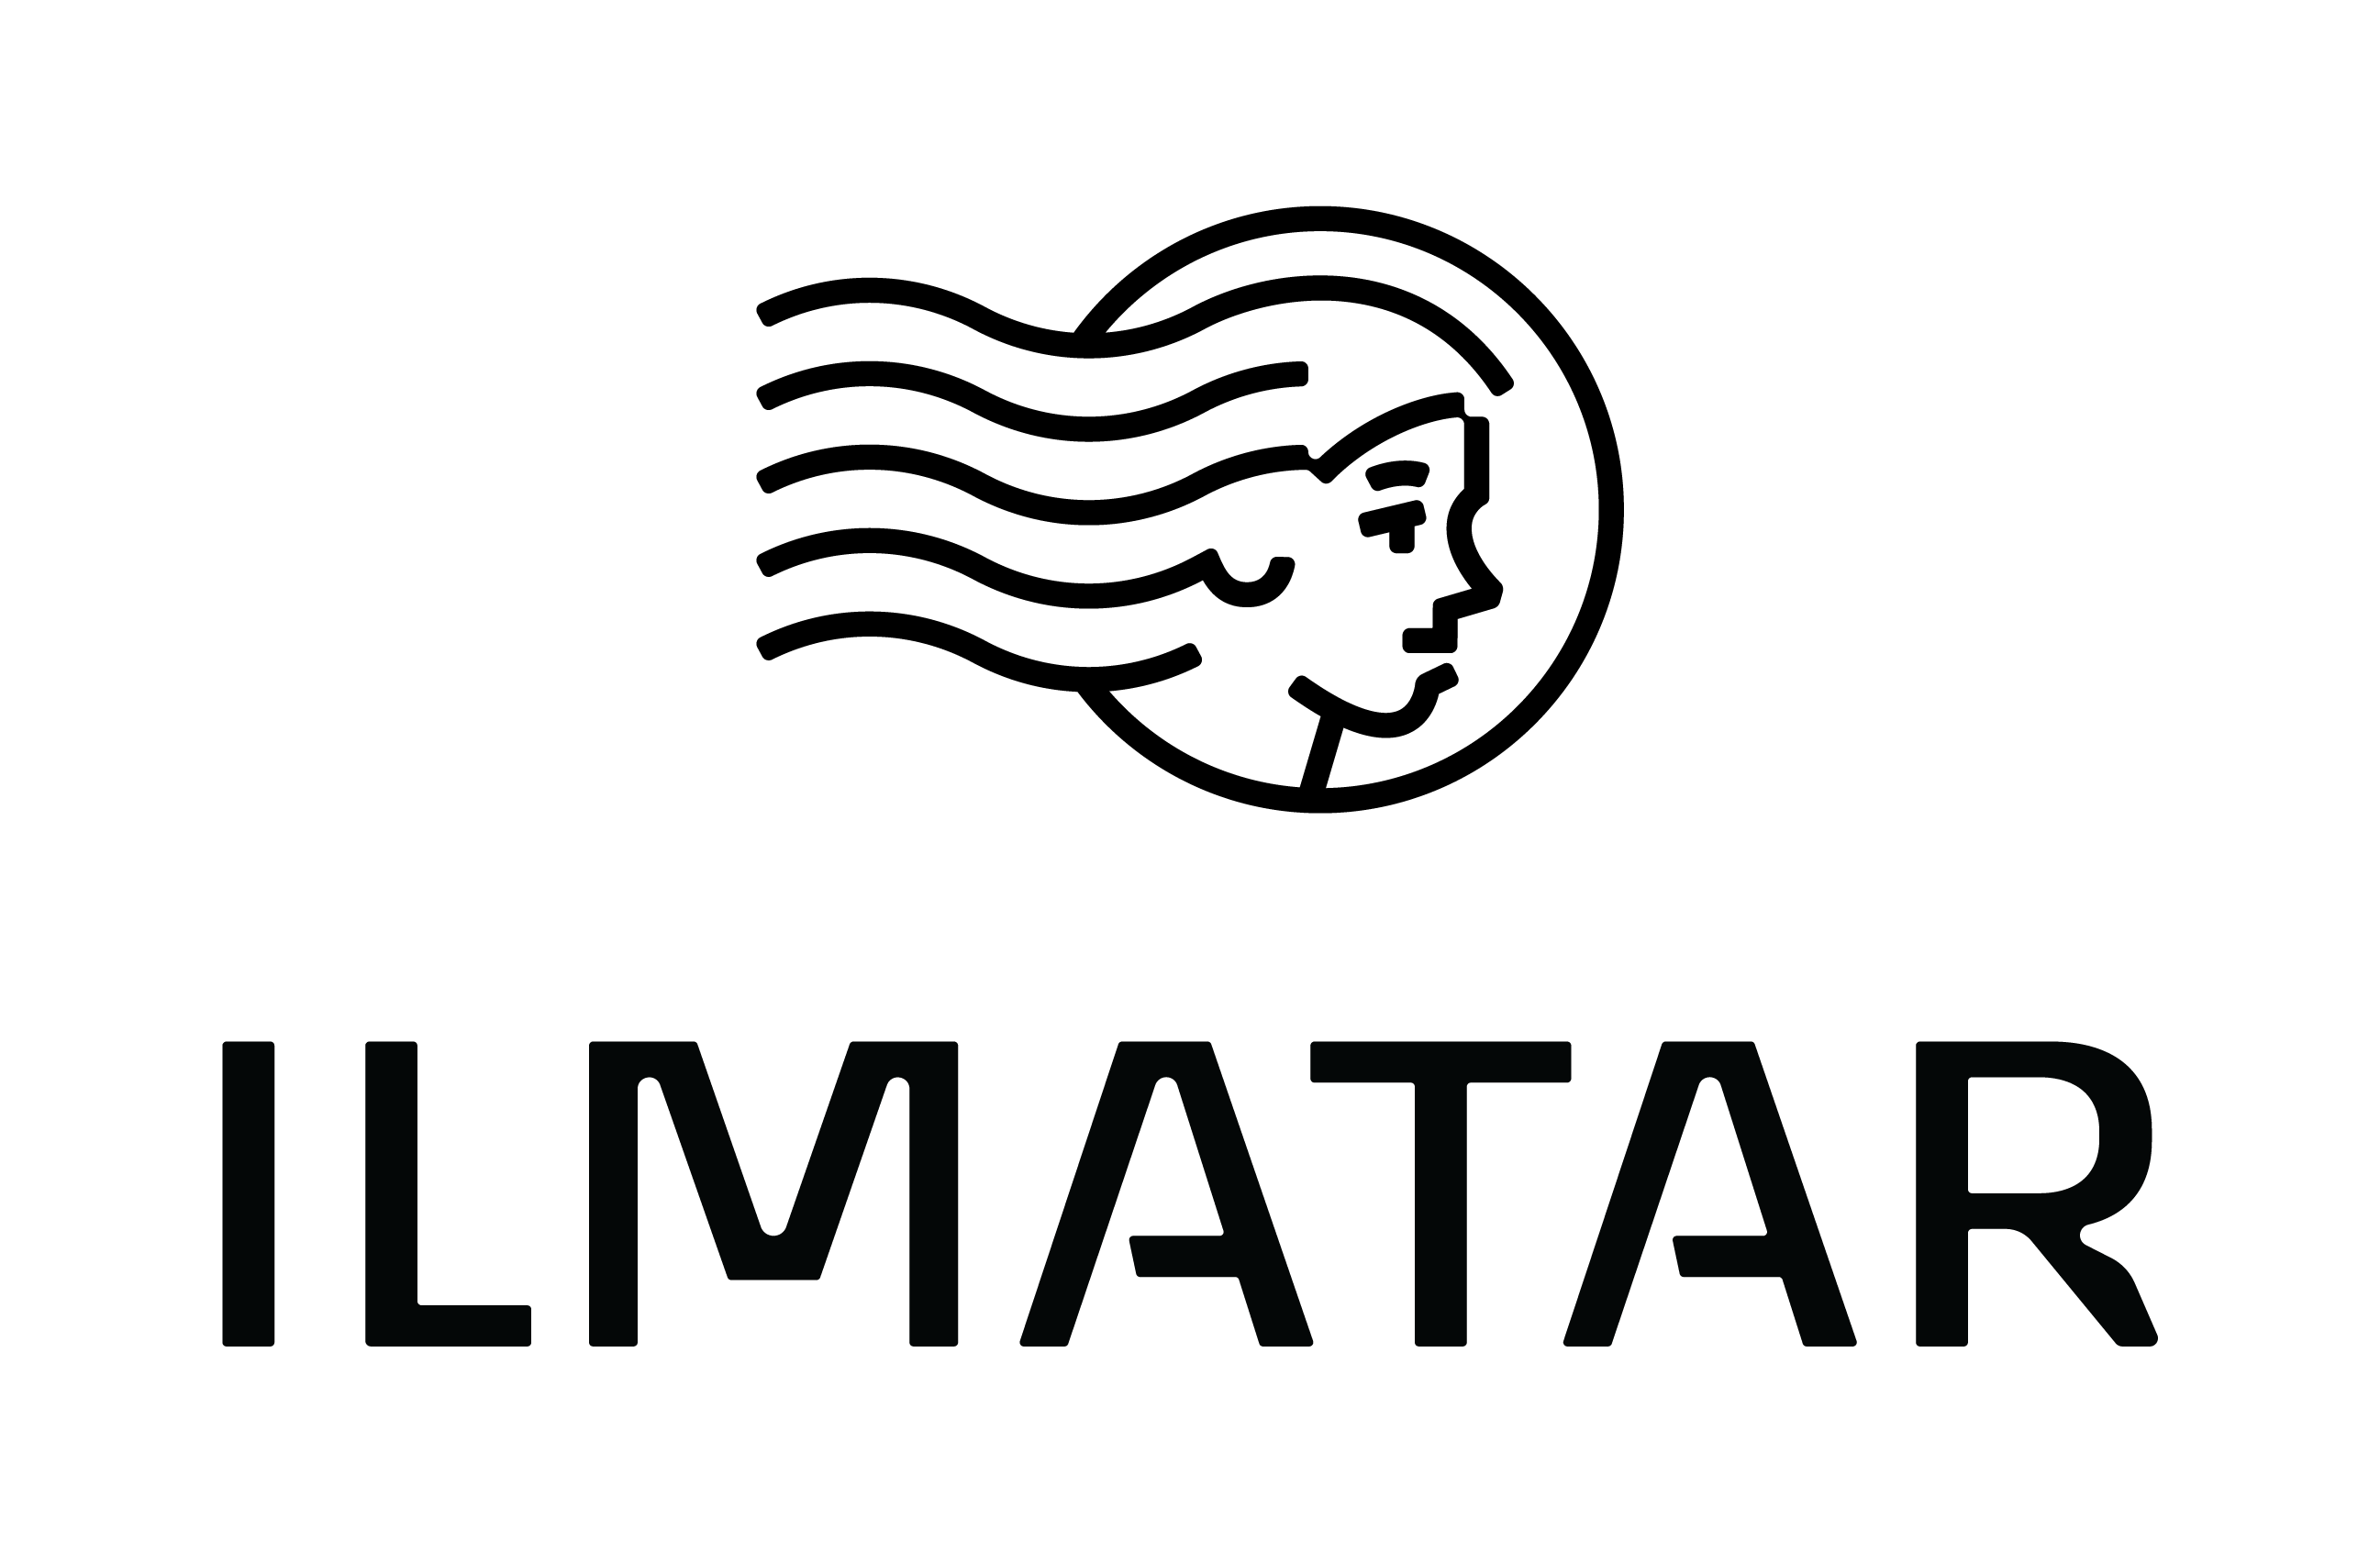 ilmatar_logo-emblem_black-002.png (68 KB)